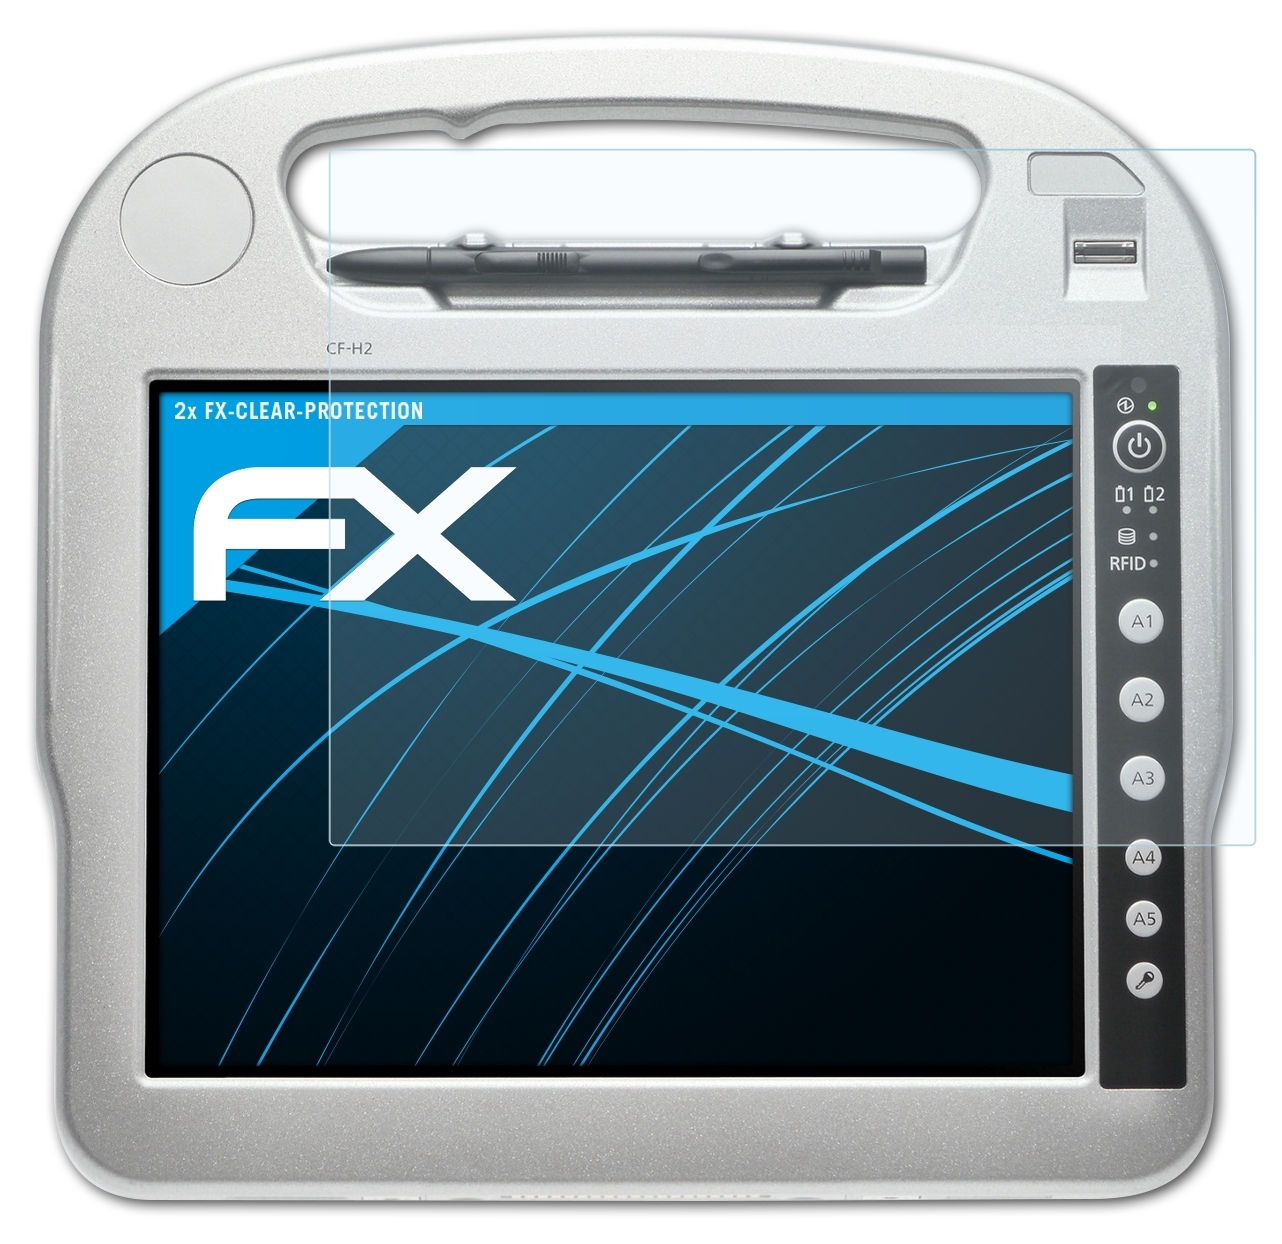 ATFOLIX 2x FX-Clear Displayschutz(für Panasonic CF-H2) ToughBook